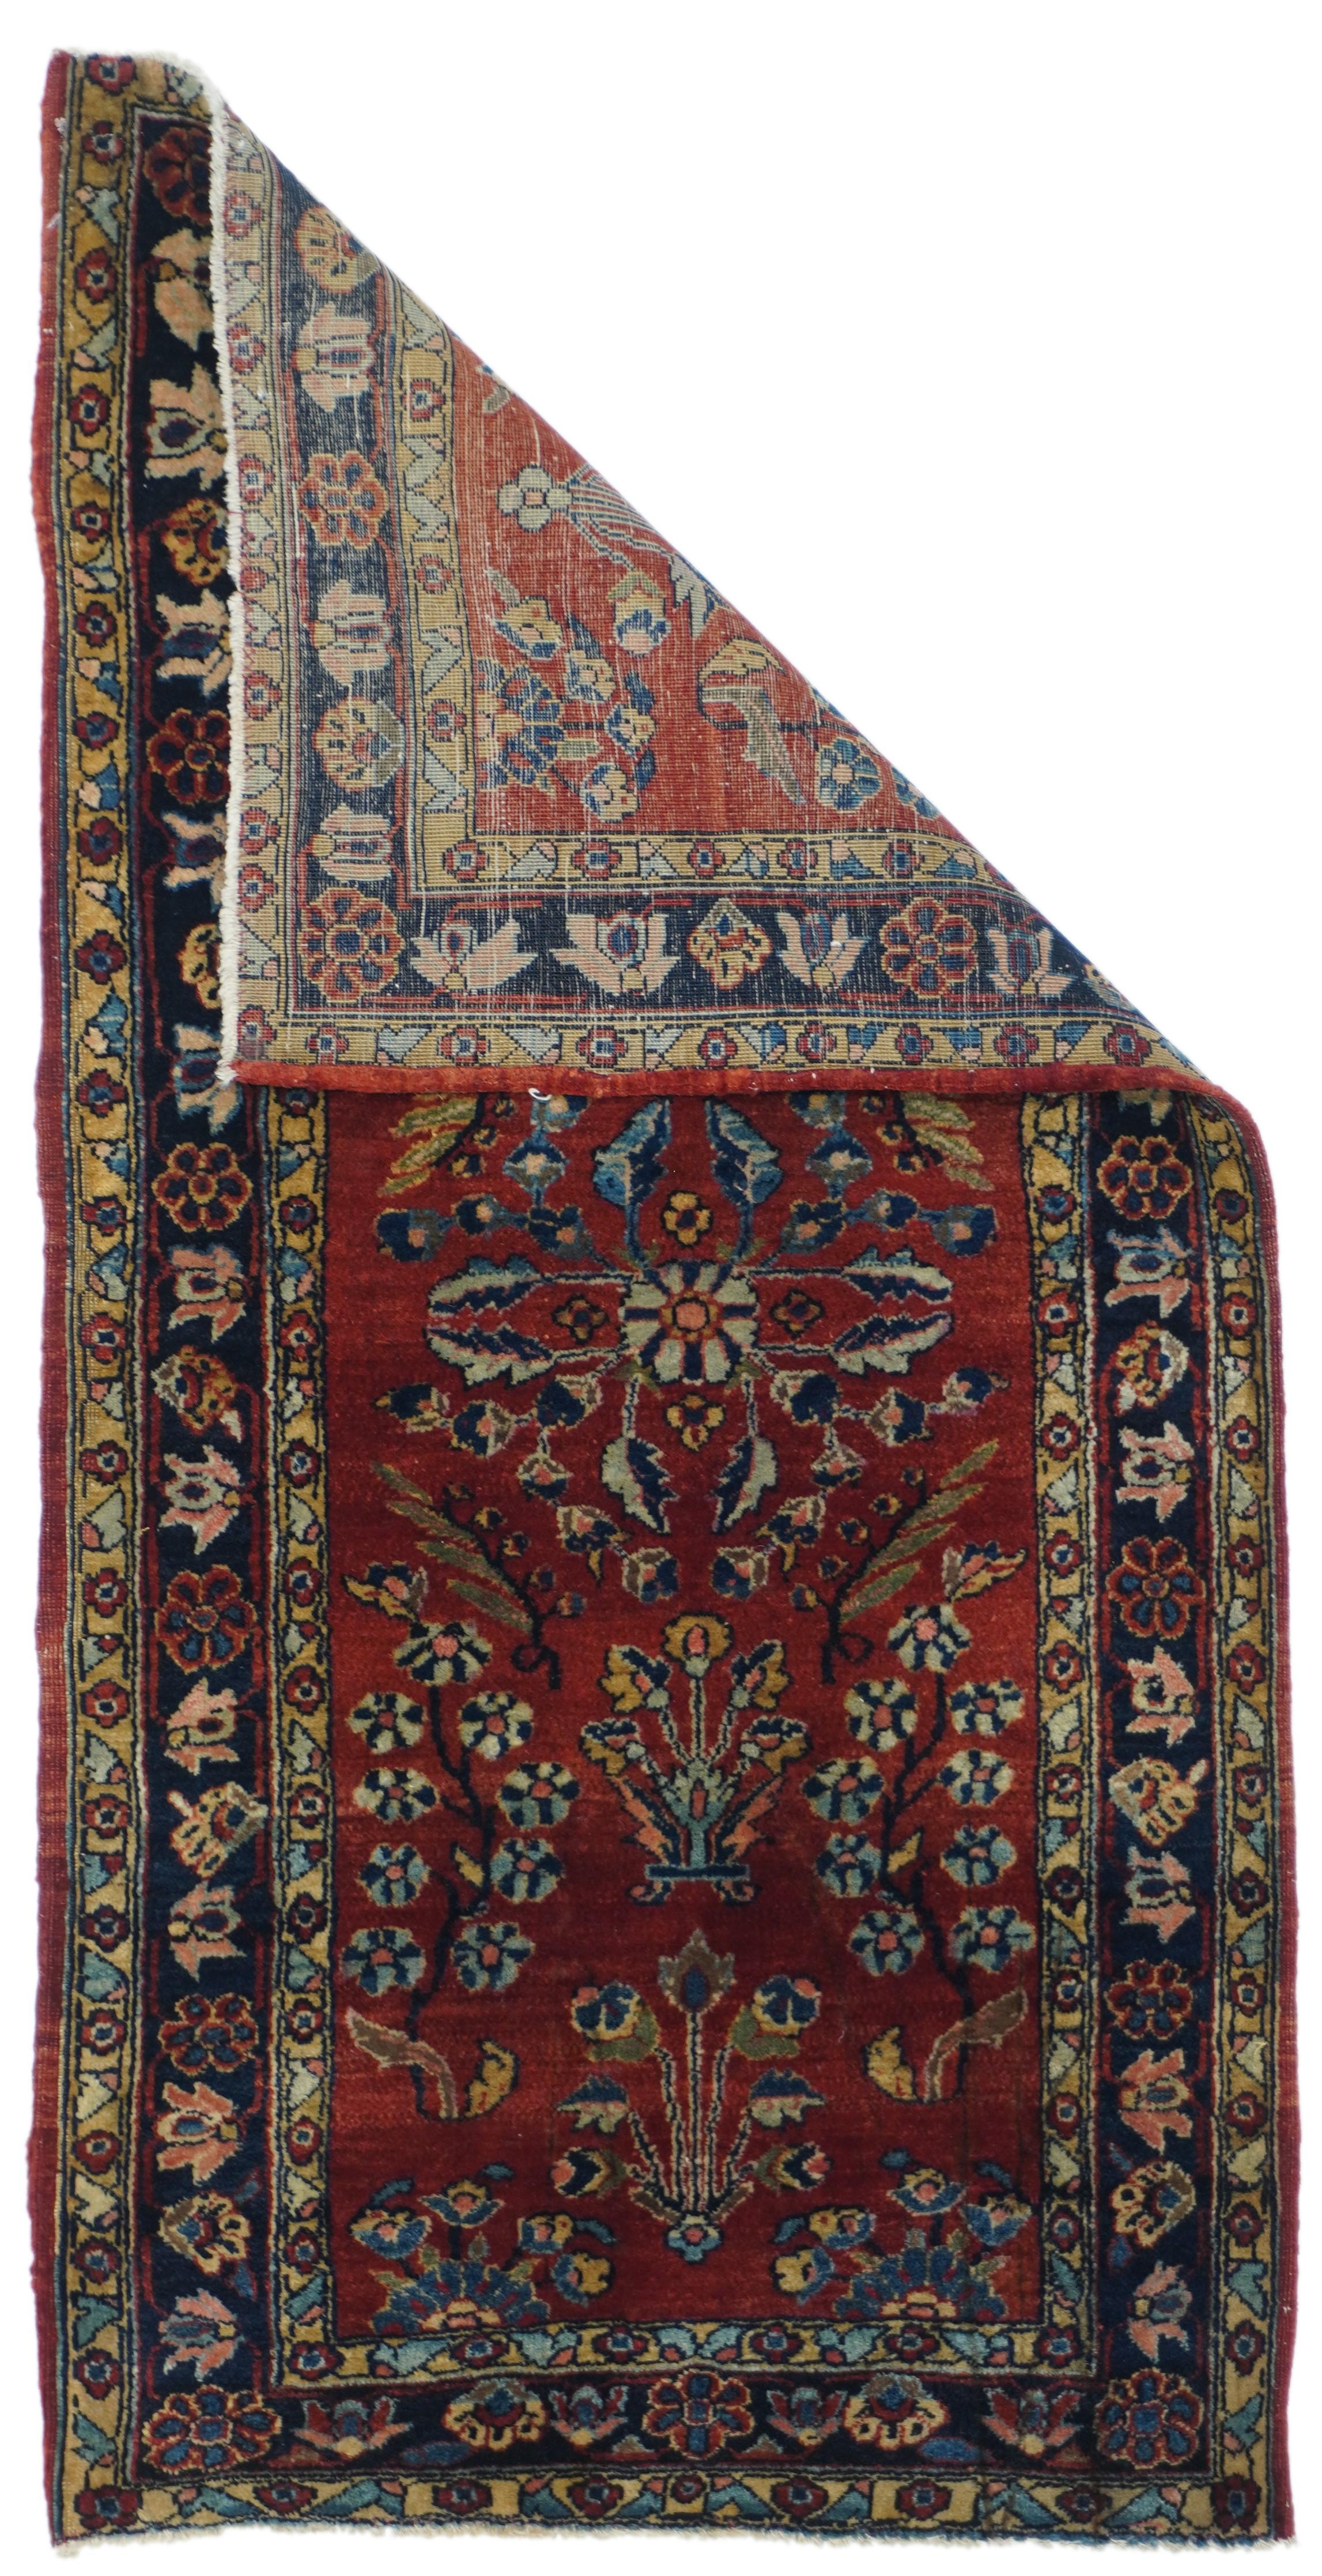 Antique Mohajeran Sarouk rug, measures : 2' x 4'.